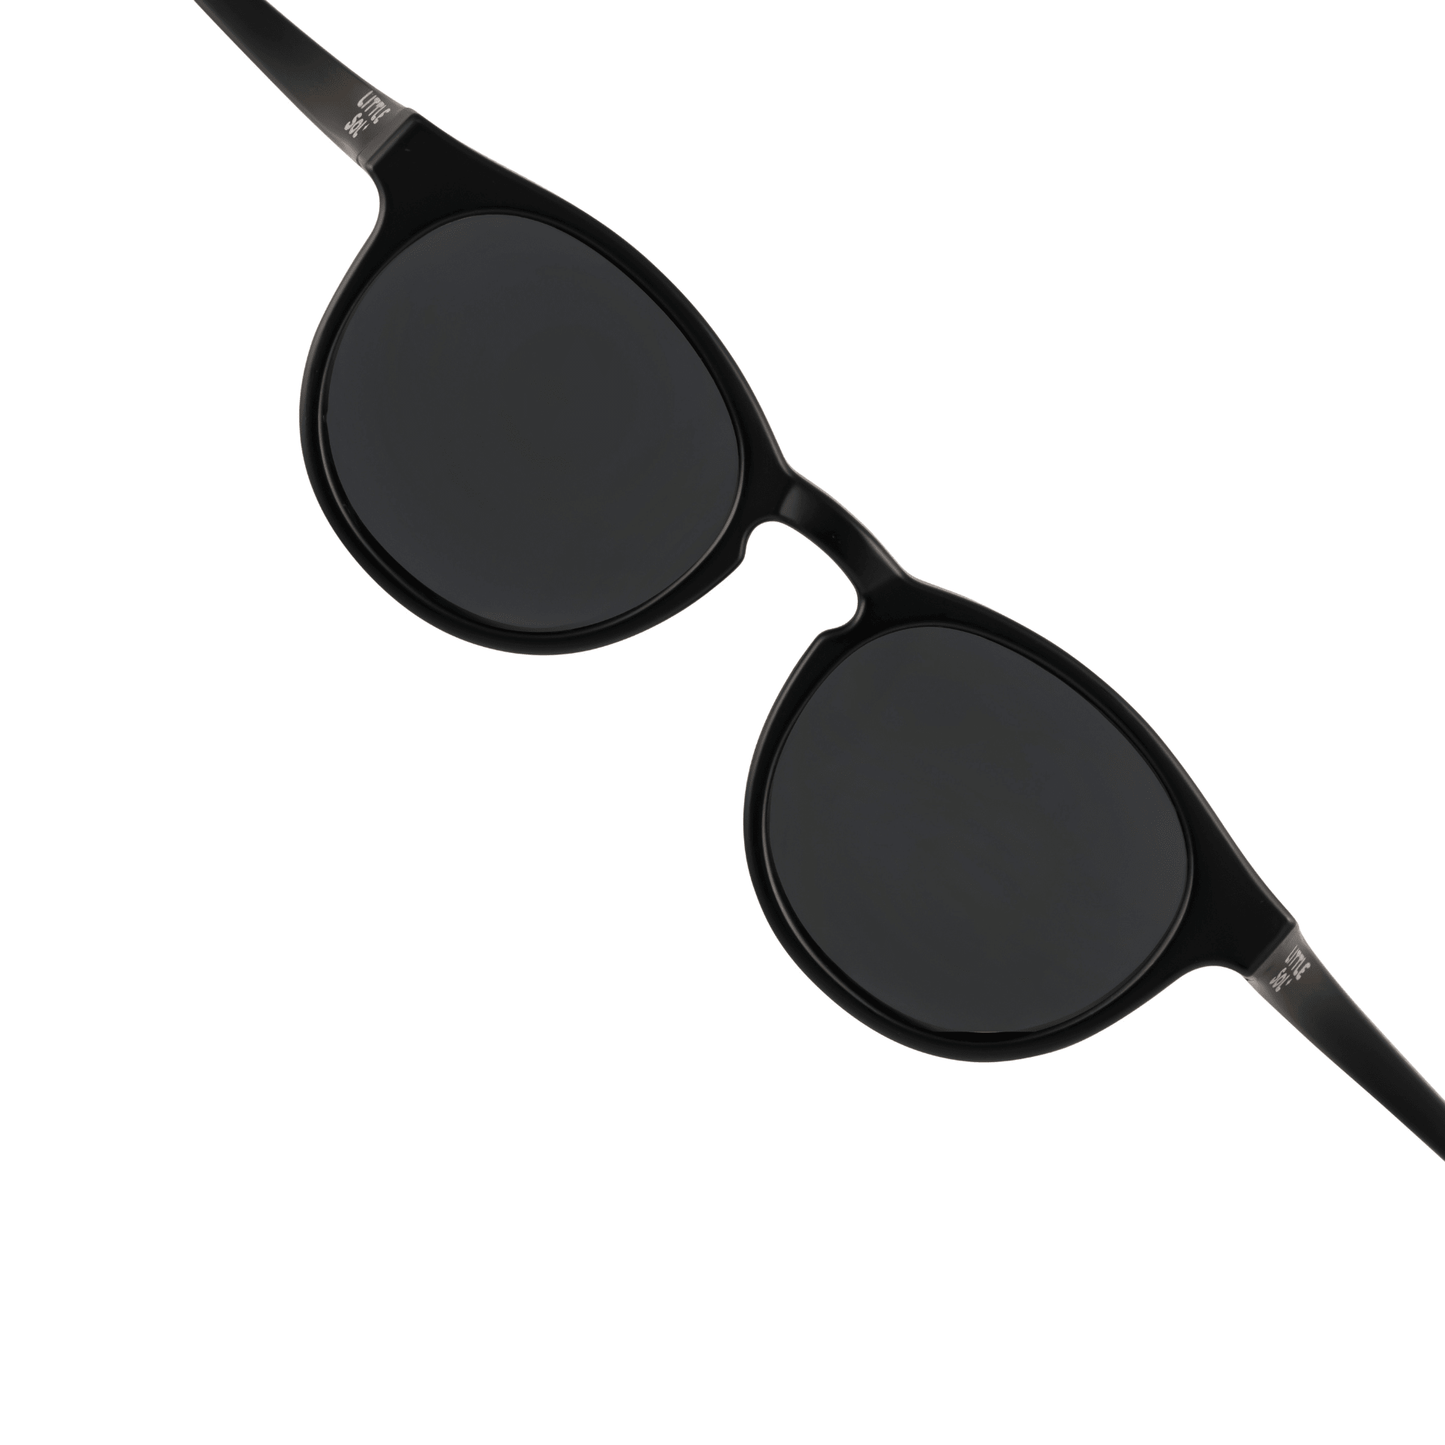 Sydney - Kids Black Sunglasses